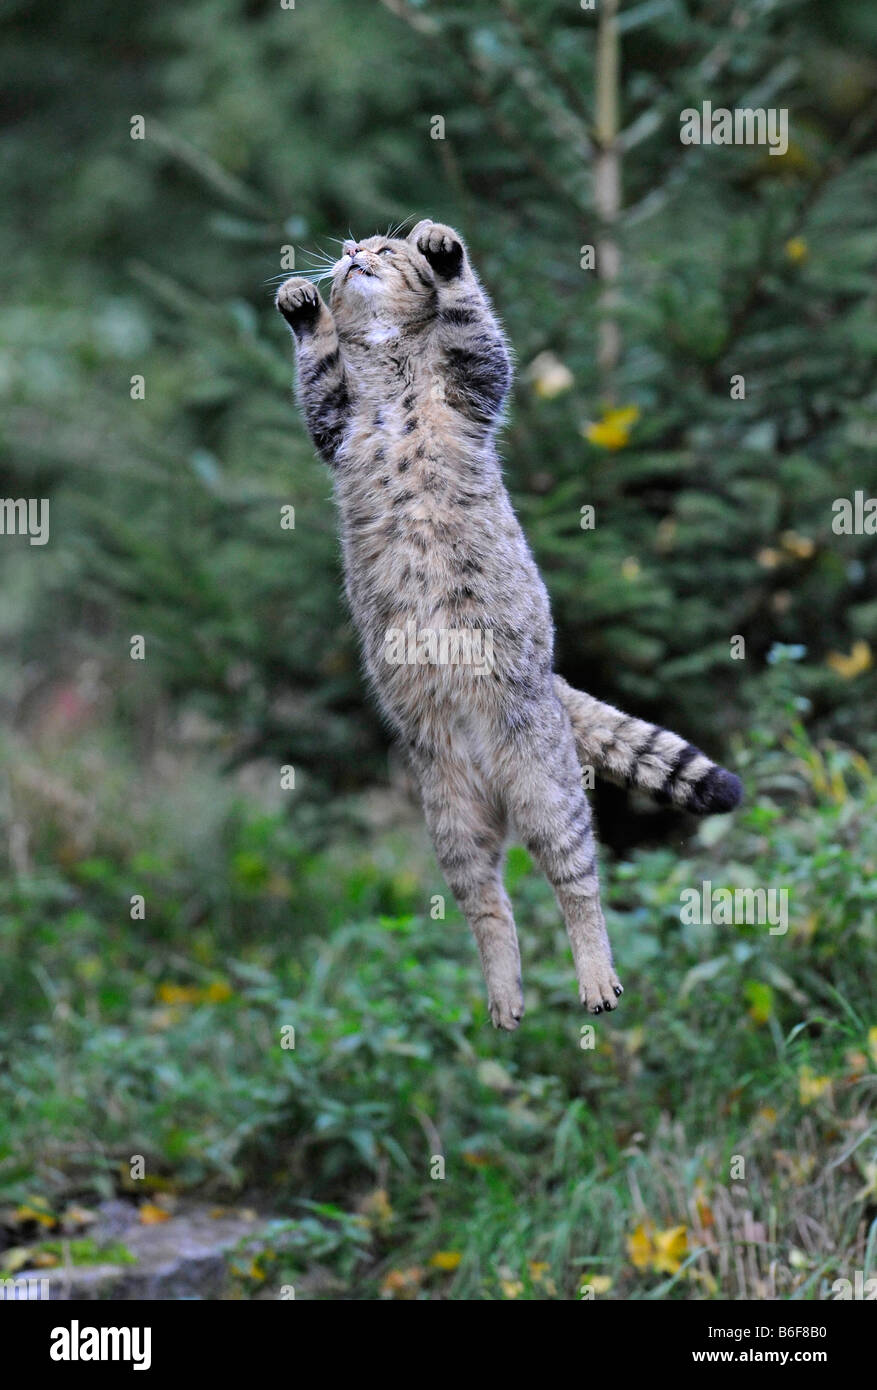 Wild Cat (Felis silvestris) jumping Stock Photo